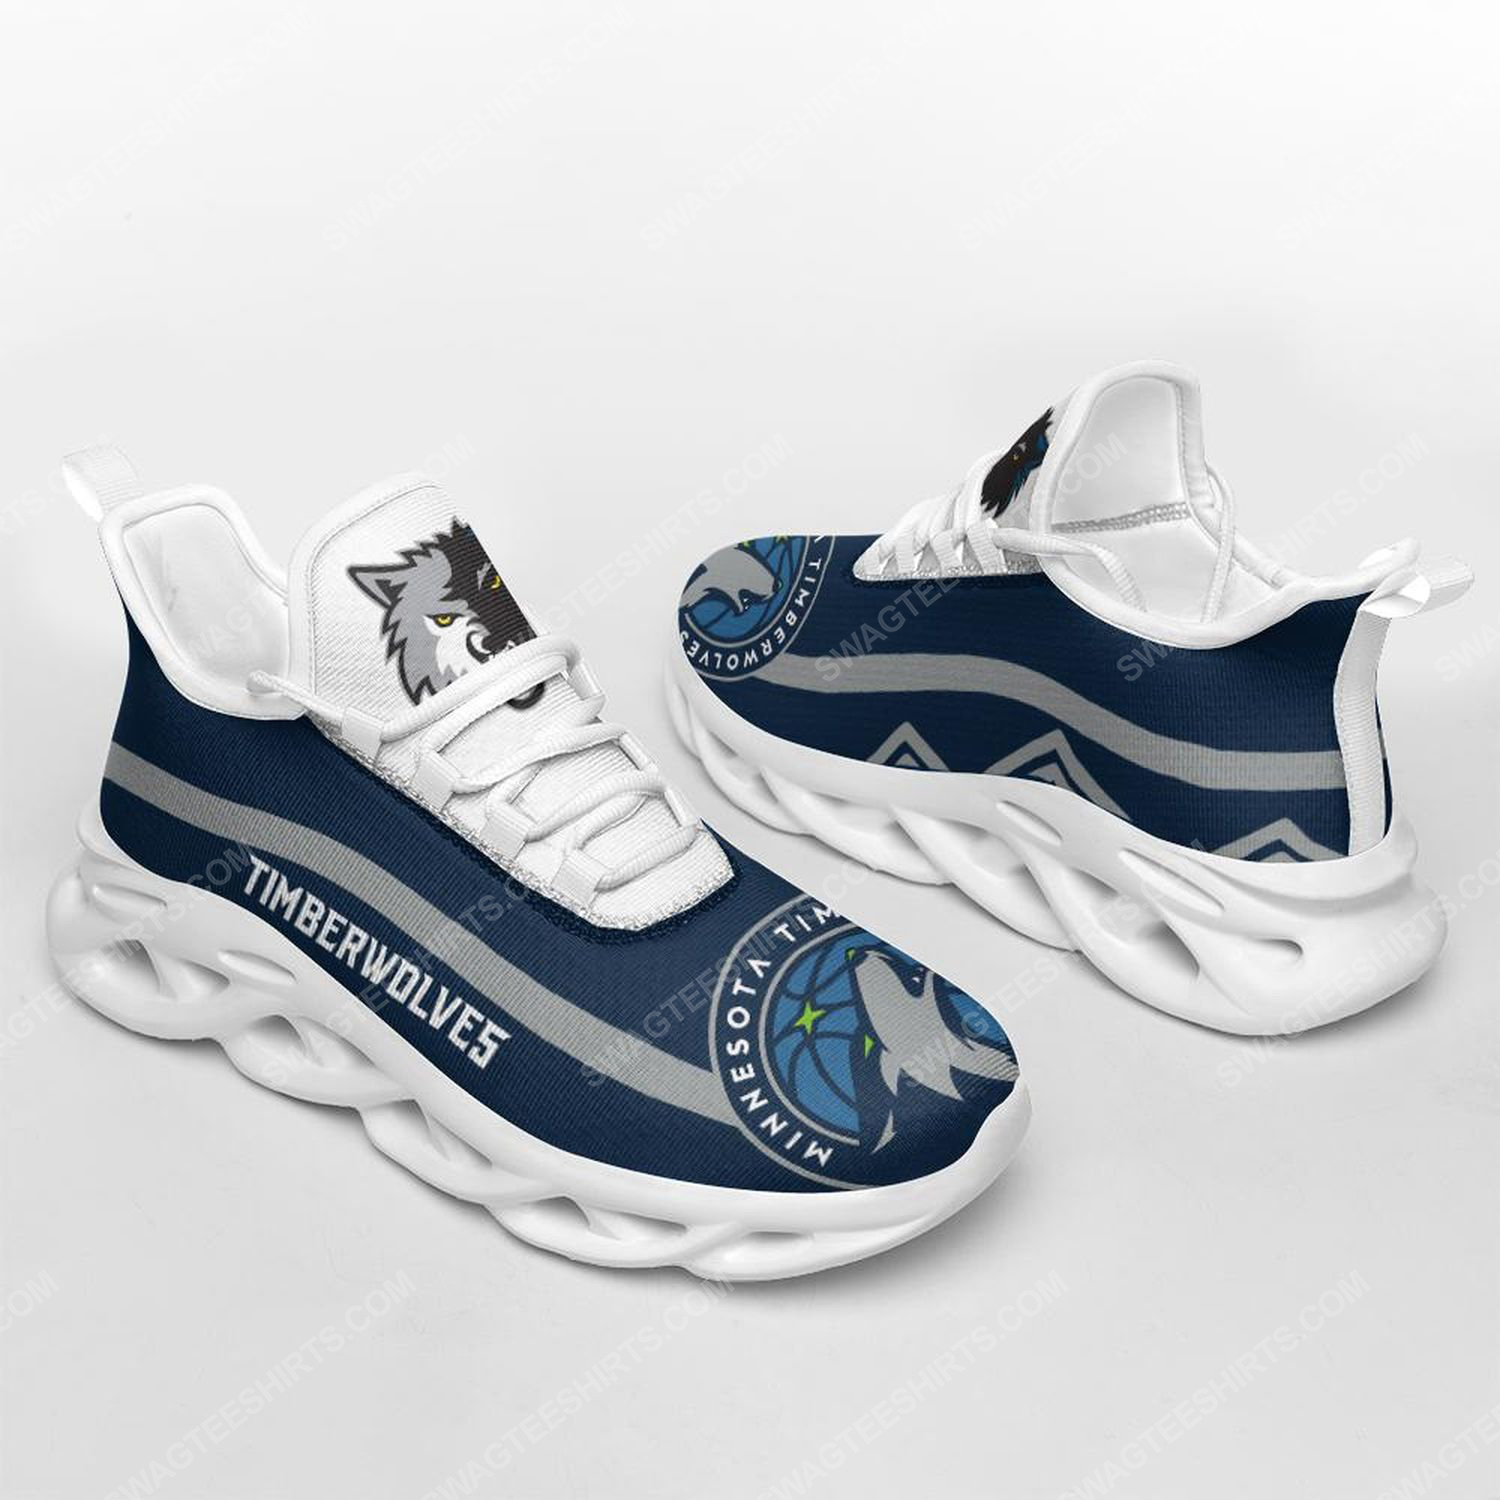 The minnesota timberwolves basketball team max soul shoes 1